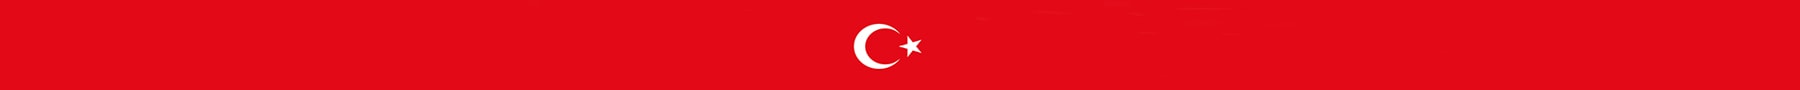 turkey-flag-background